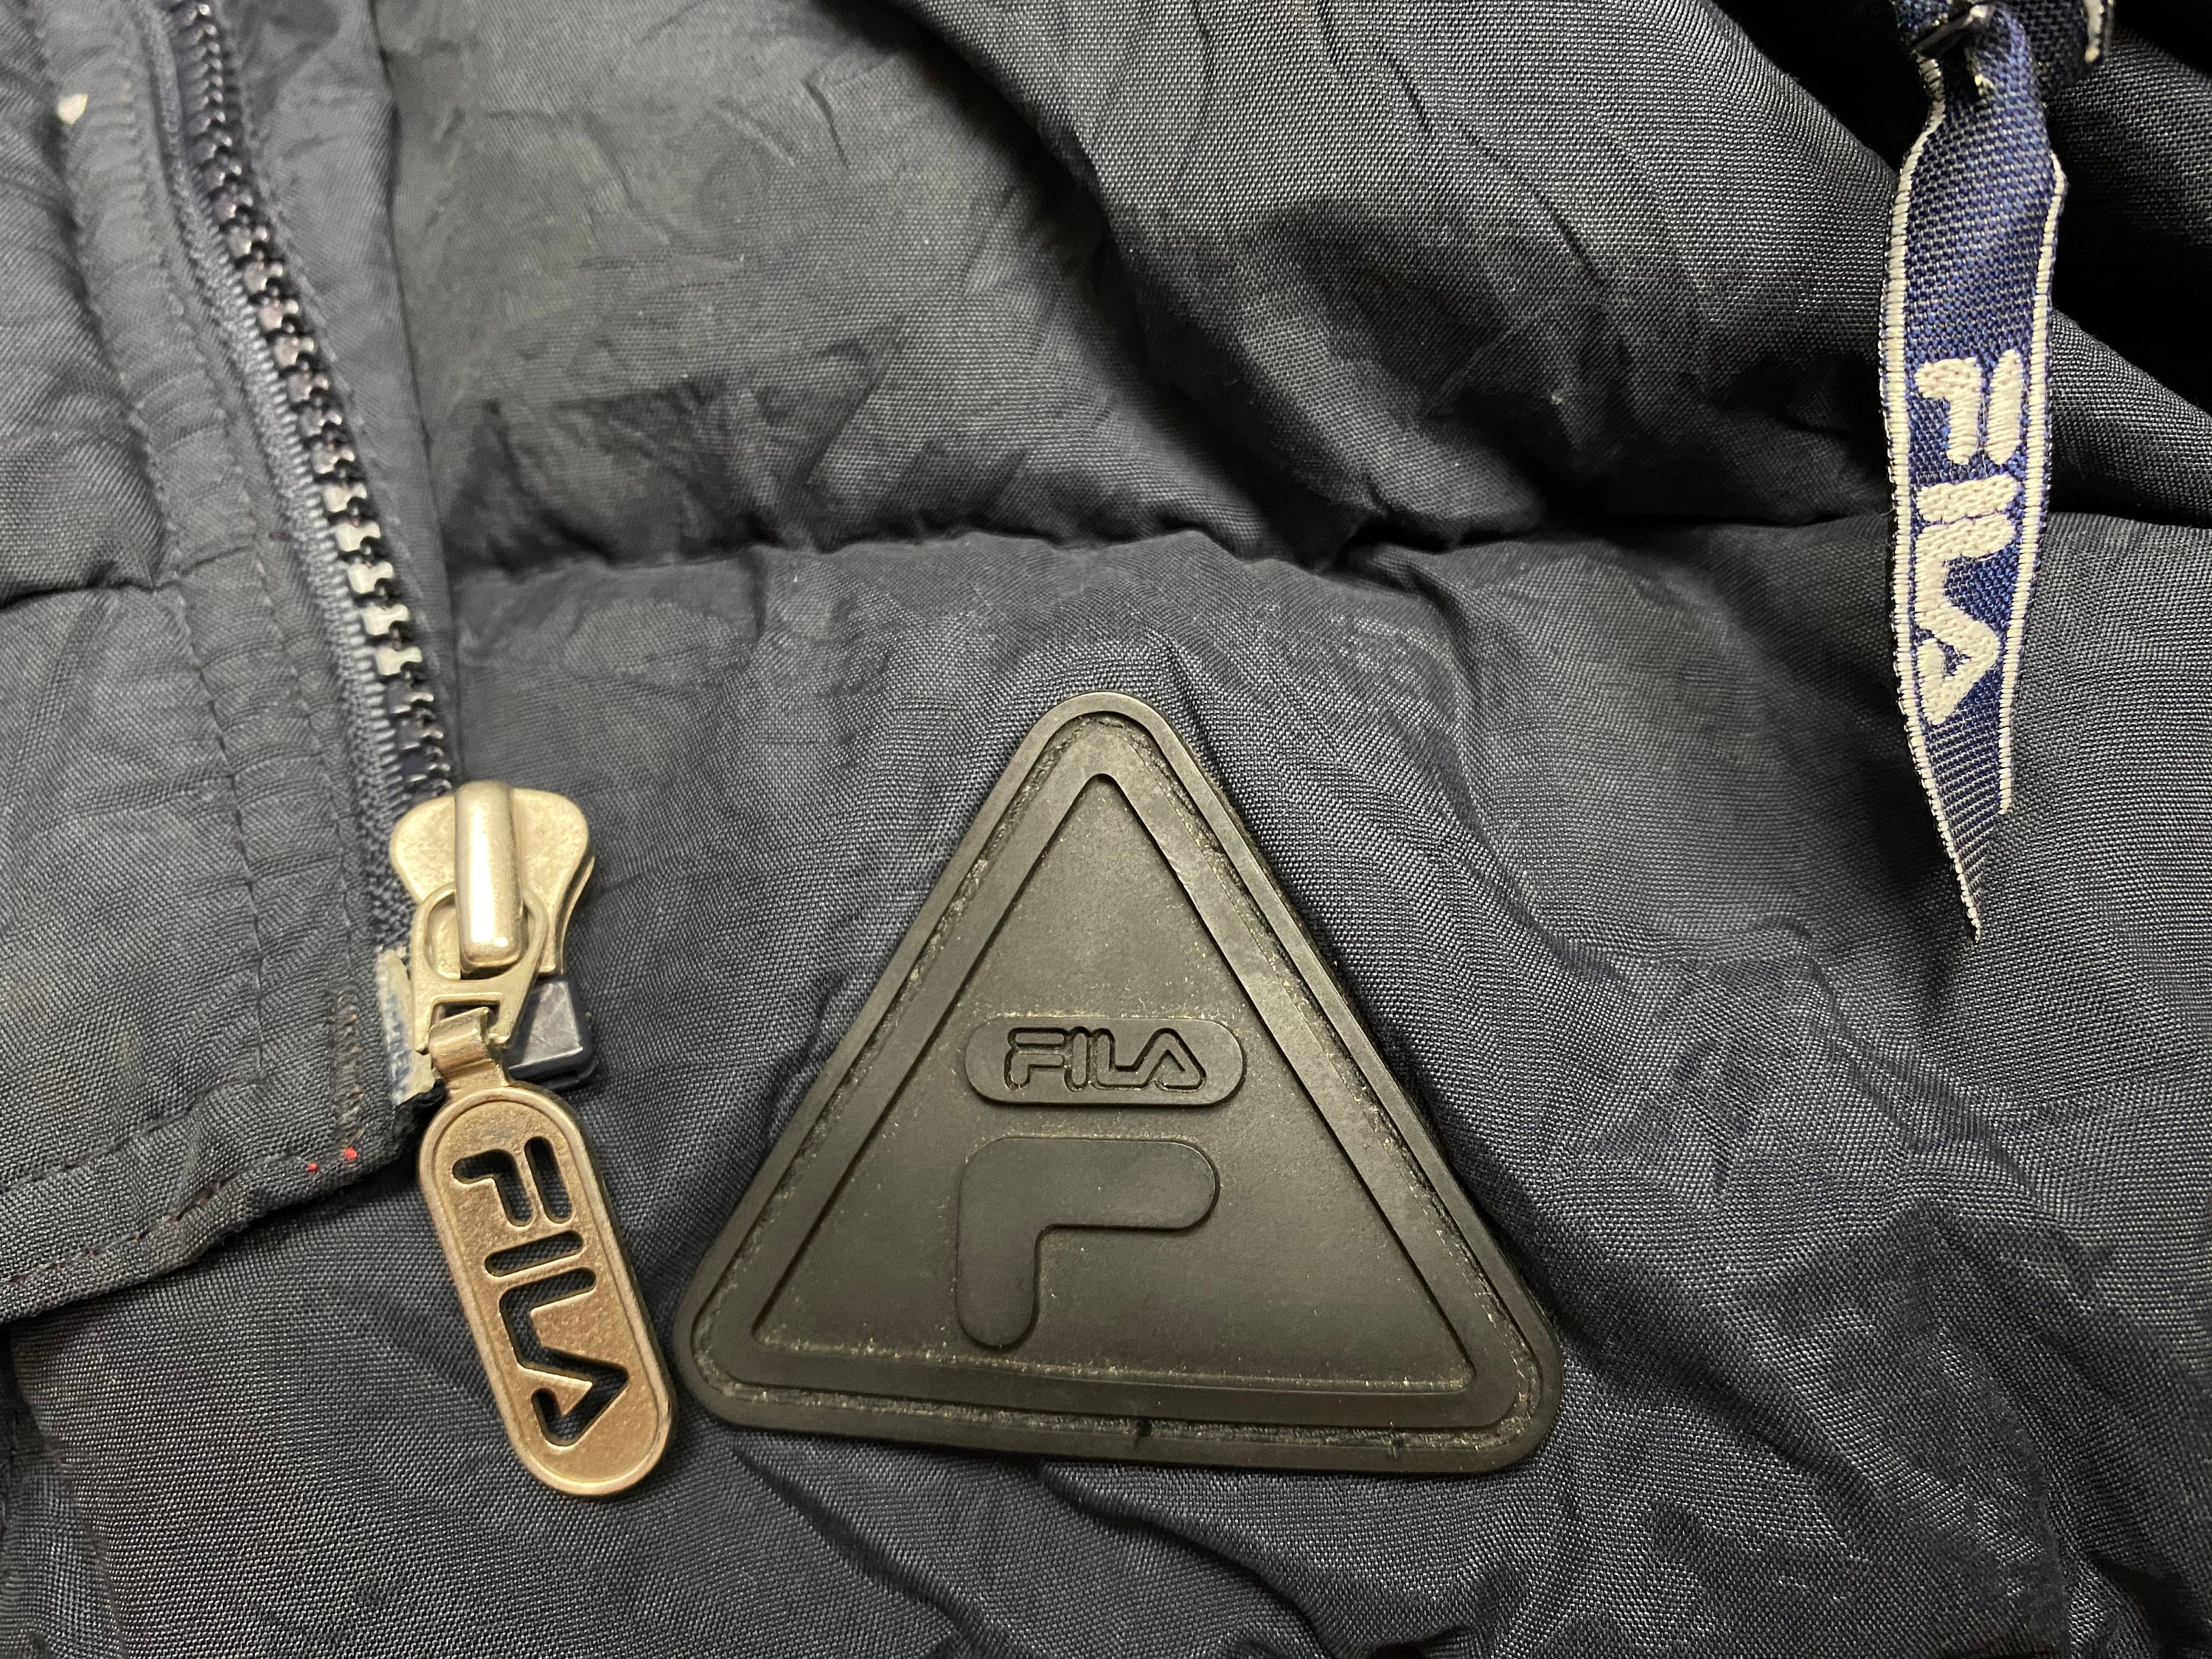 Fila Puffer Down Jacket Full-Zip Size S Adult | Etsy